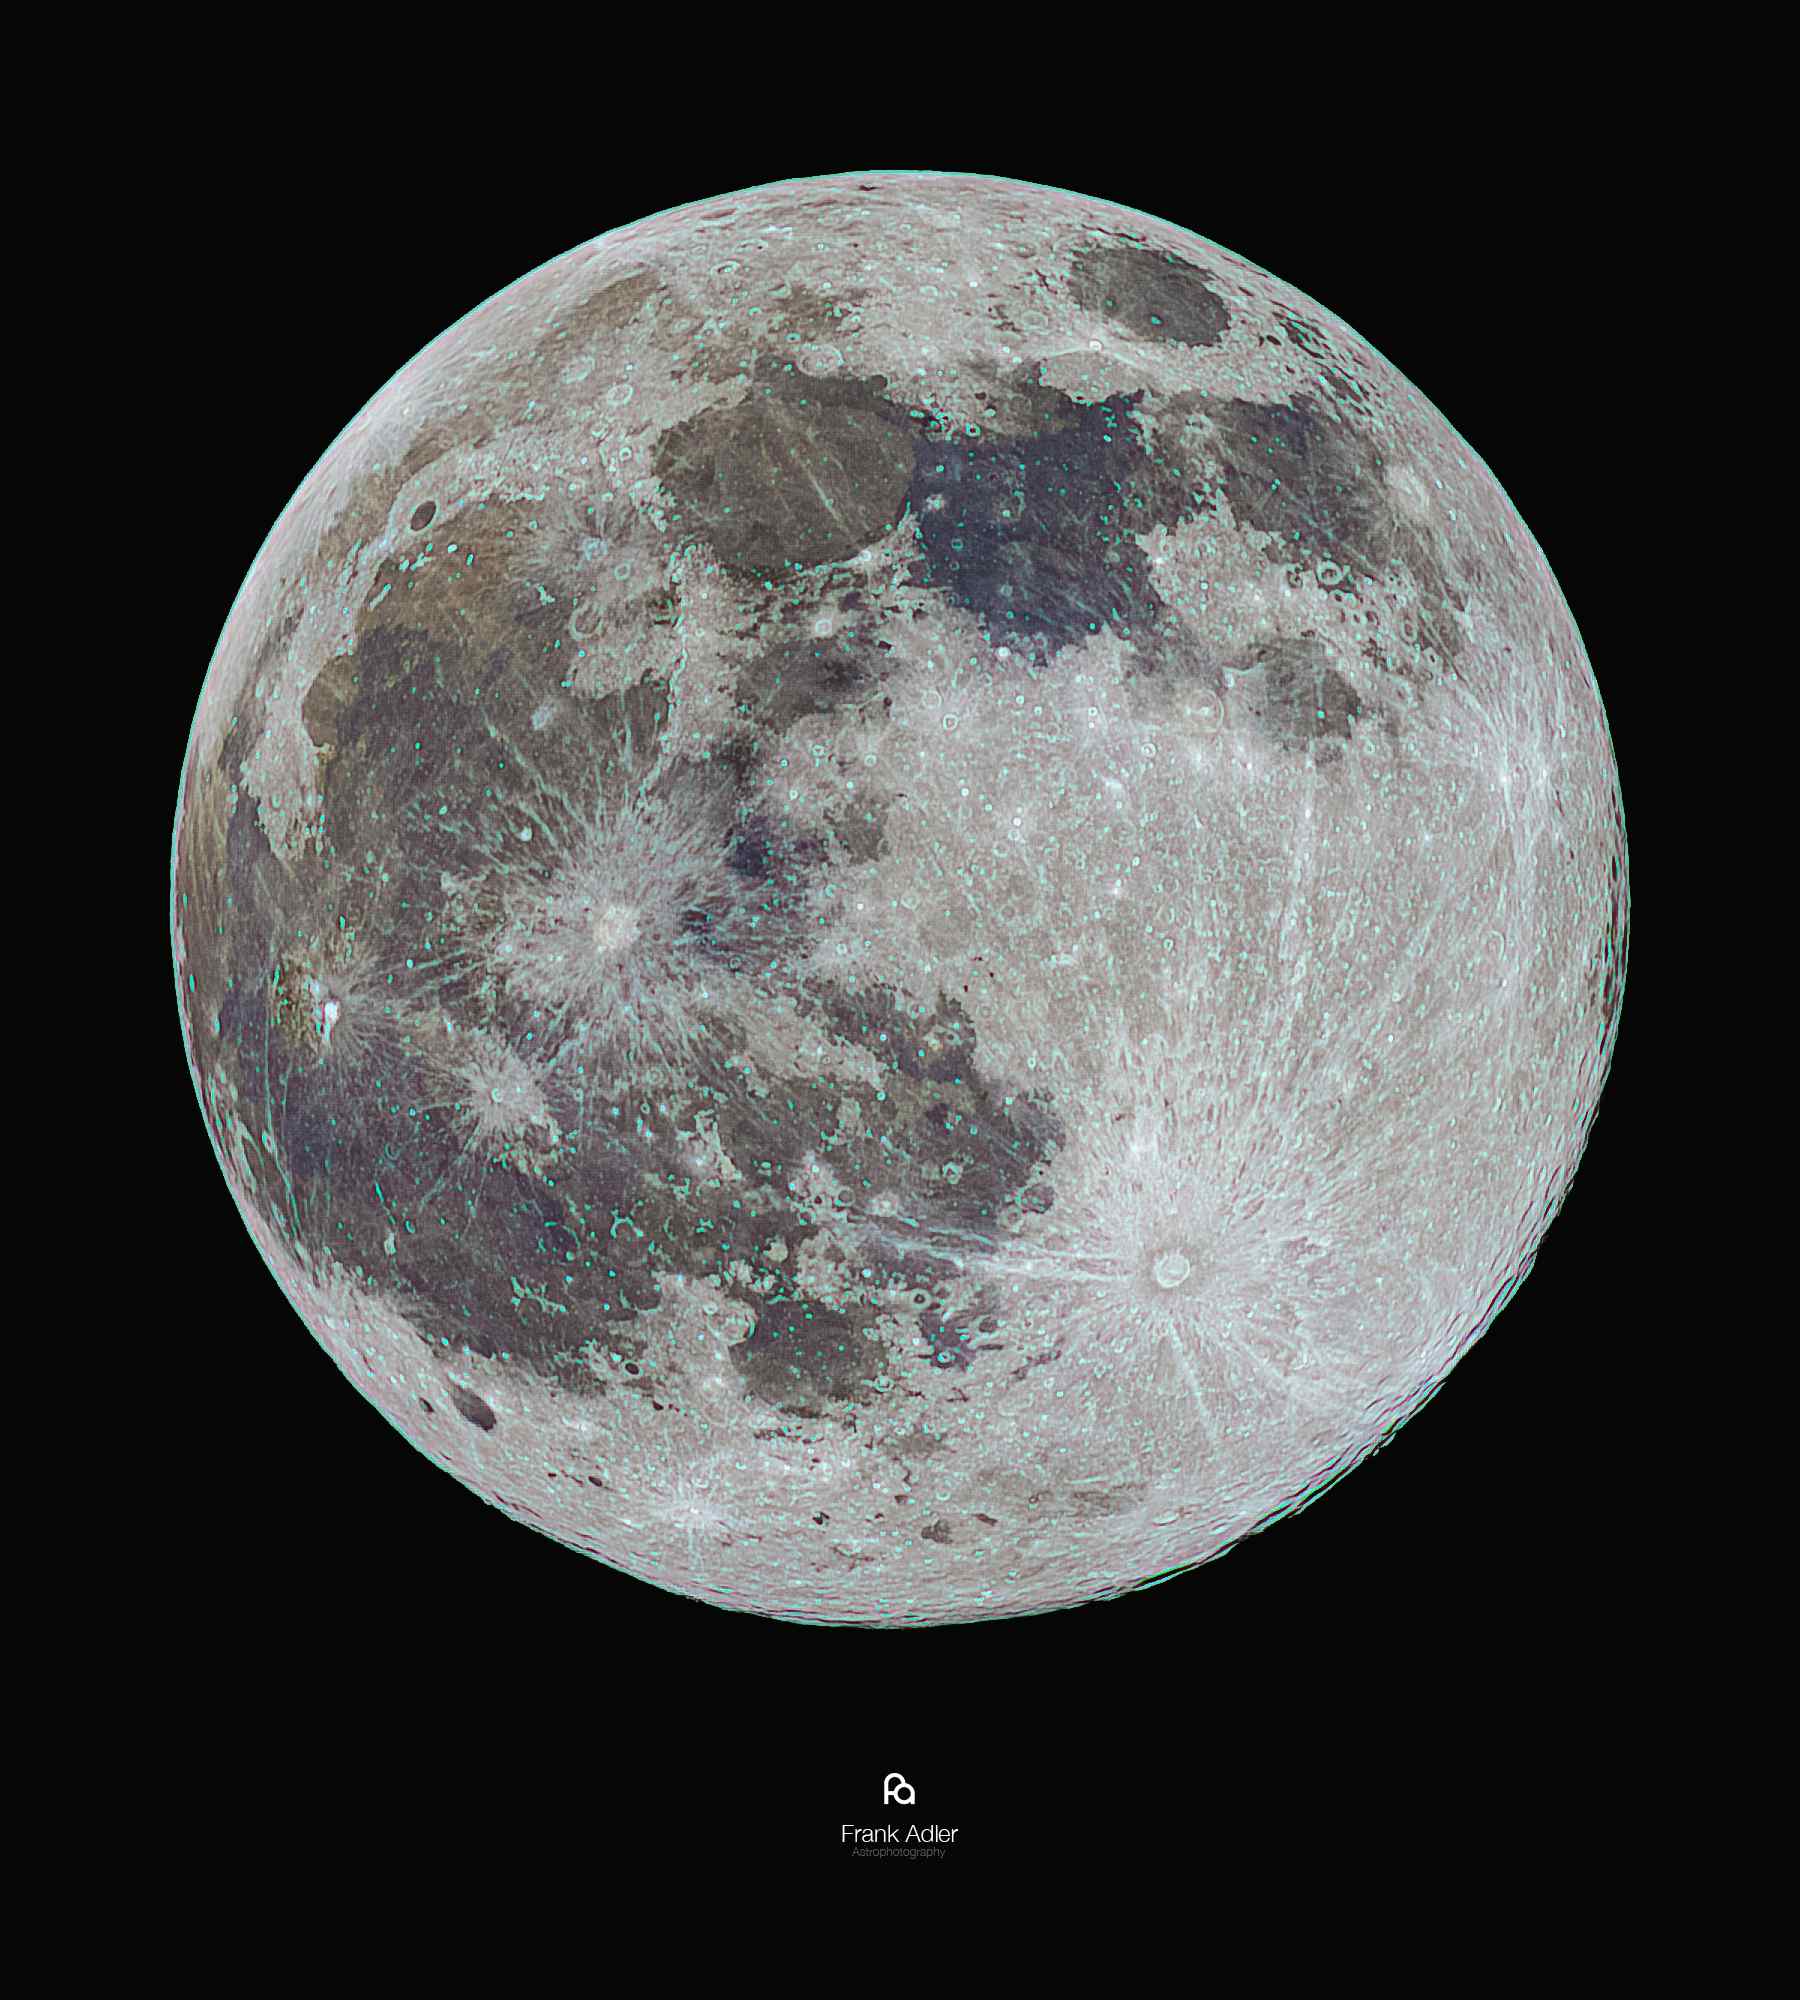 Full Moon in false color